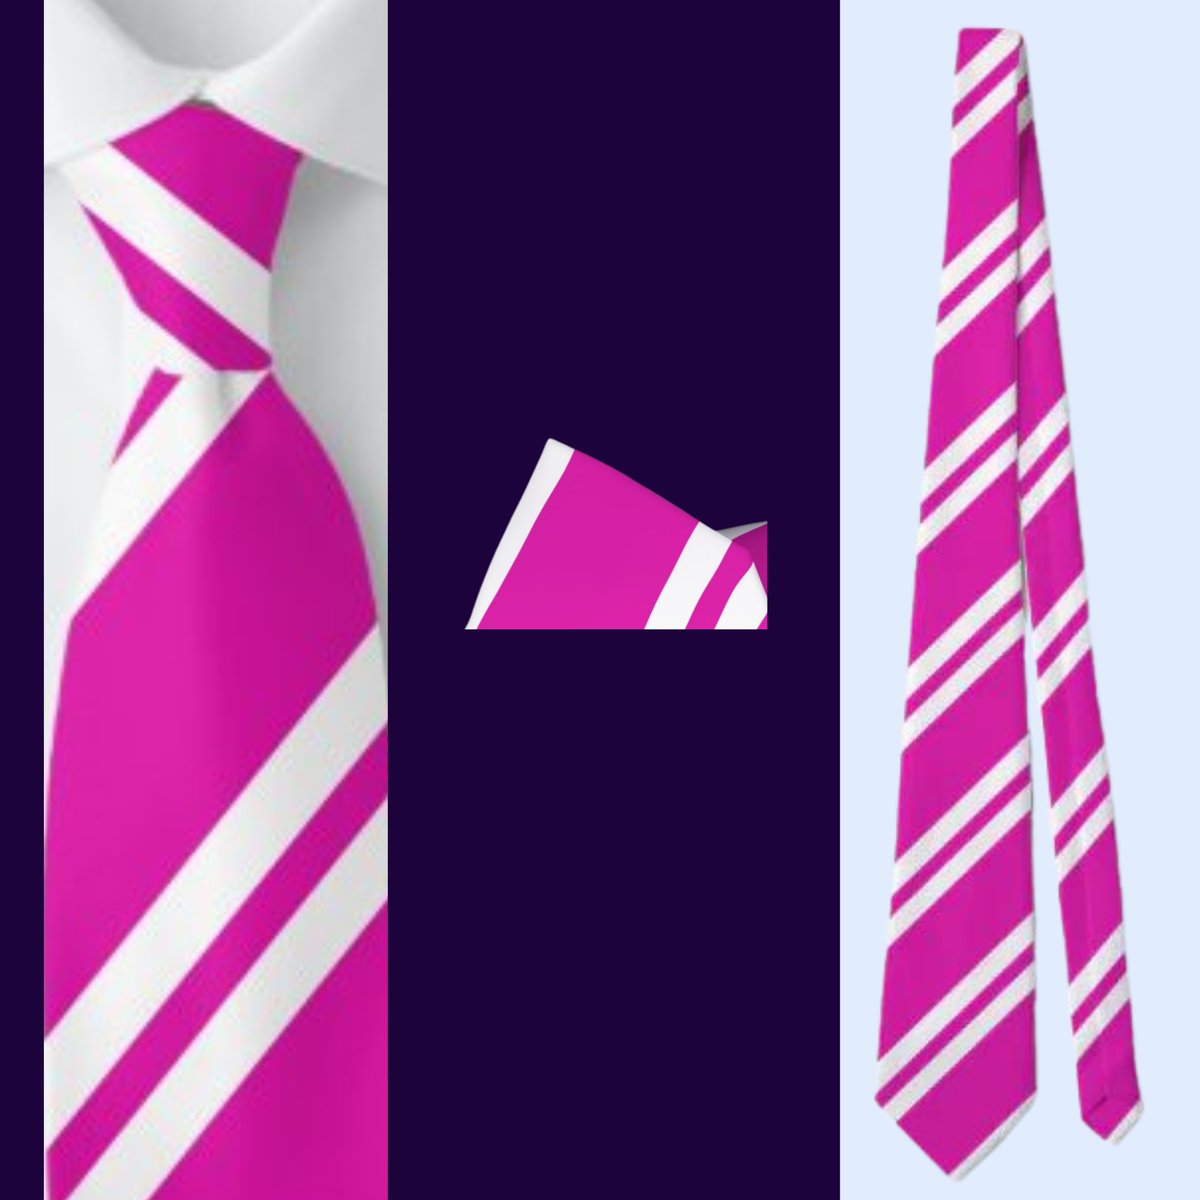 Pink White Striped Pattern Neck Tie zazzle.com/z/au8fon7s?rf=… via @zazzle #SundayFunday #menswear #necktie #Mensfashion #gifts #GIFTforX #dad #boyfriend #women #de_fi #fashion #multi #clothing #brand #llc #official #clothingbrand #clothingline #clothingstore